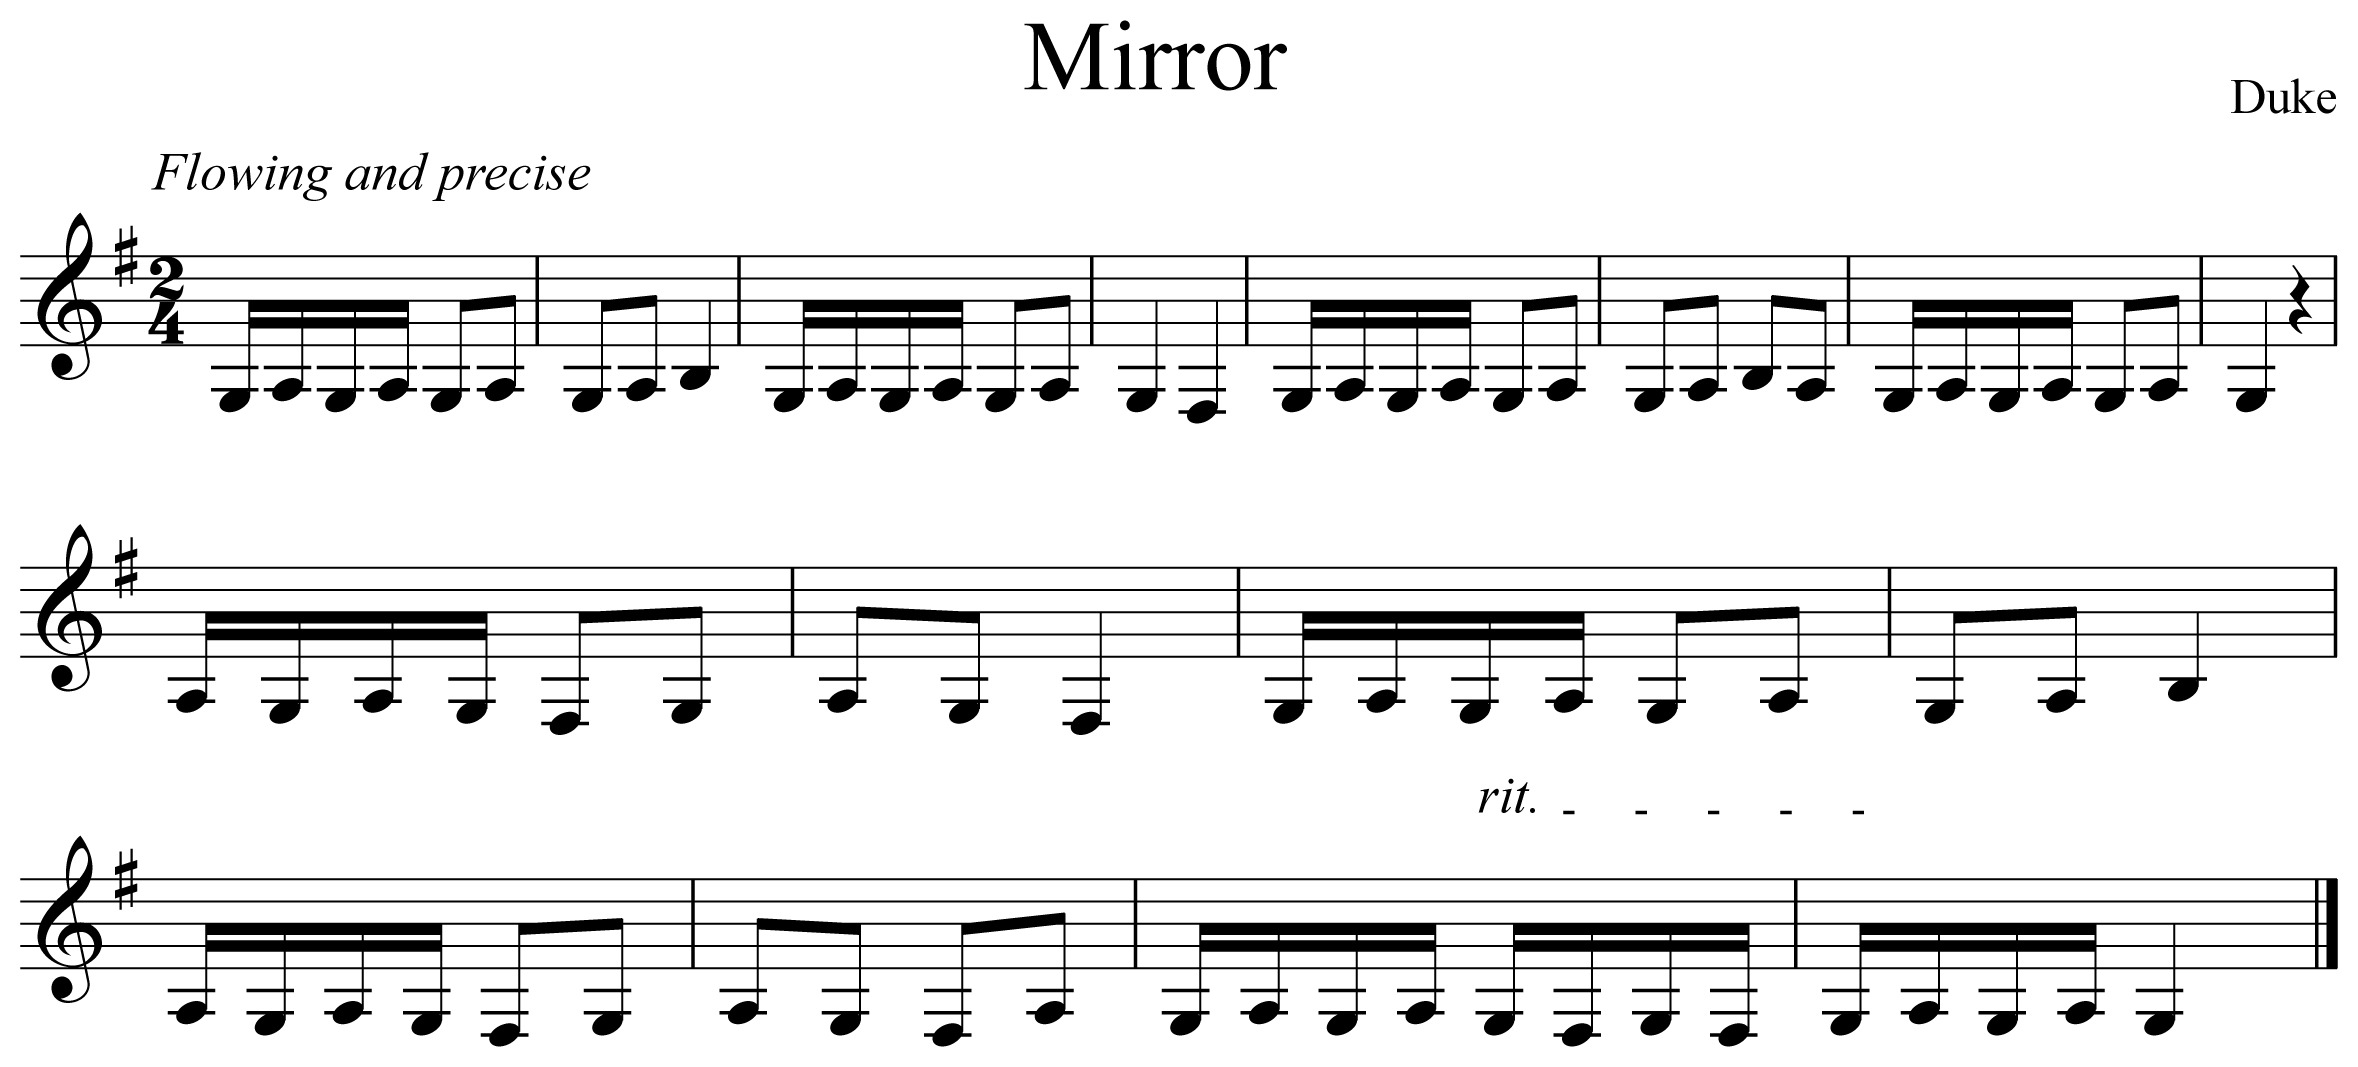 Mirror Music Notation Clarinet